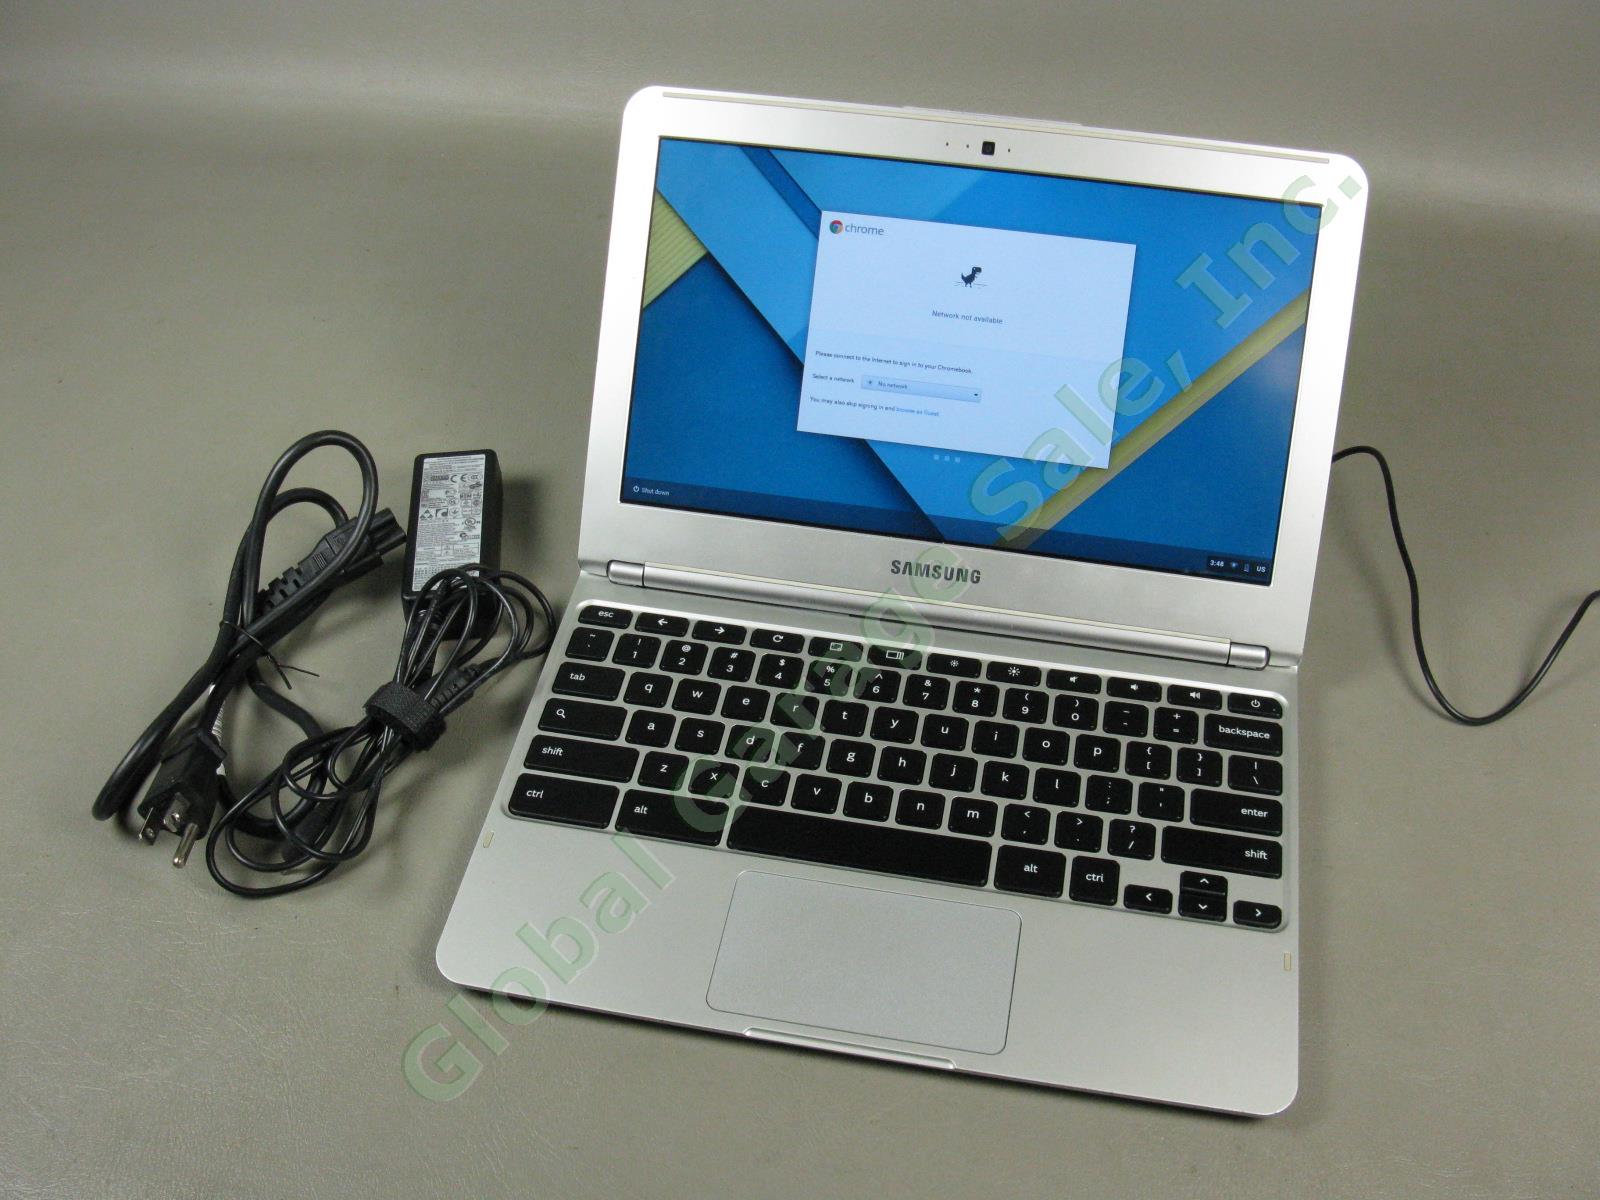 Samsung Chromebook Netbook Computer XE303C12 11.6" 1.7 GHz 2GB RAM 16GB NO RES!